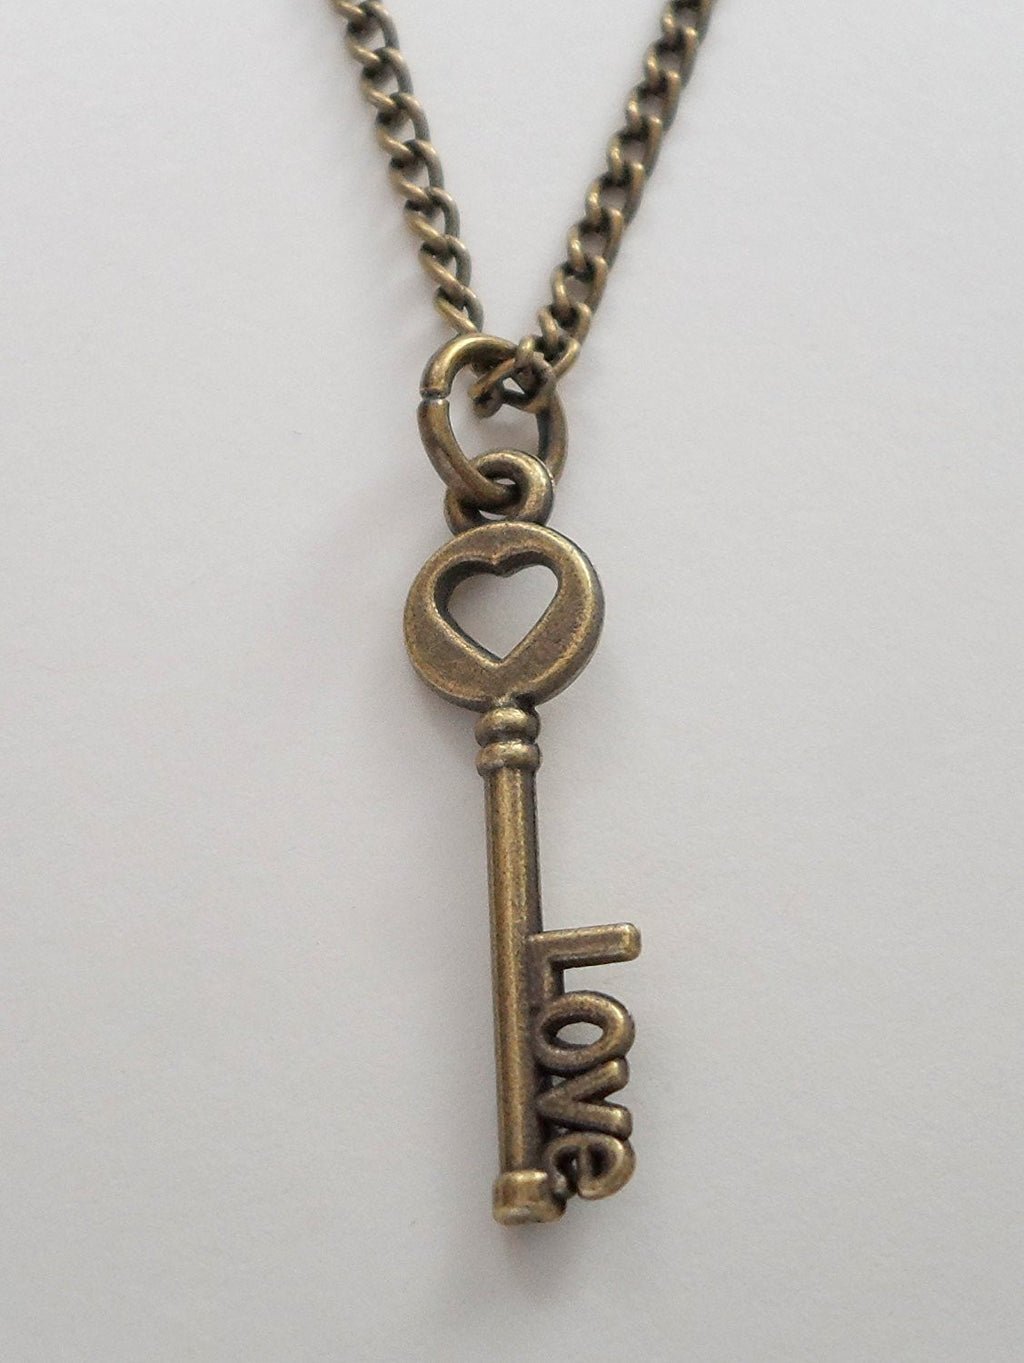 Bronze Love Key Necklace - You've Got The Key To My Heart